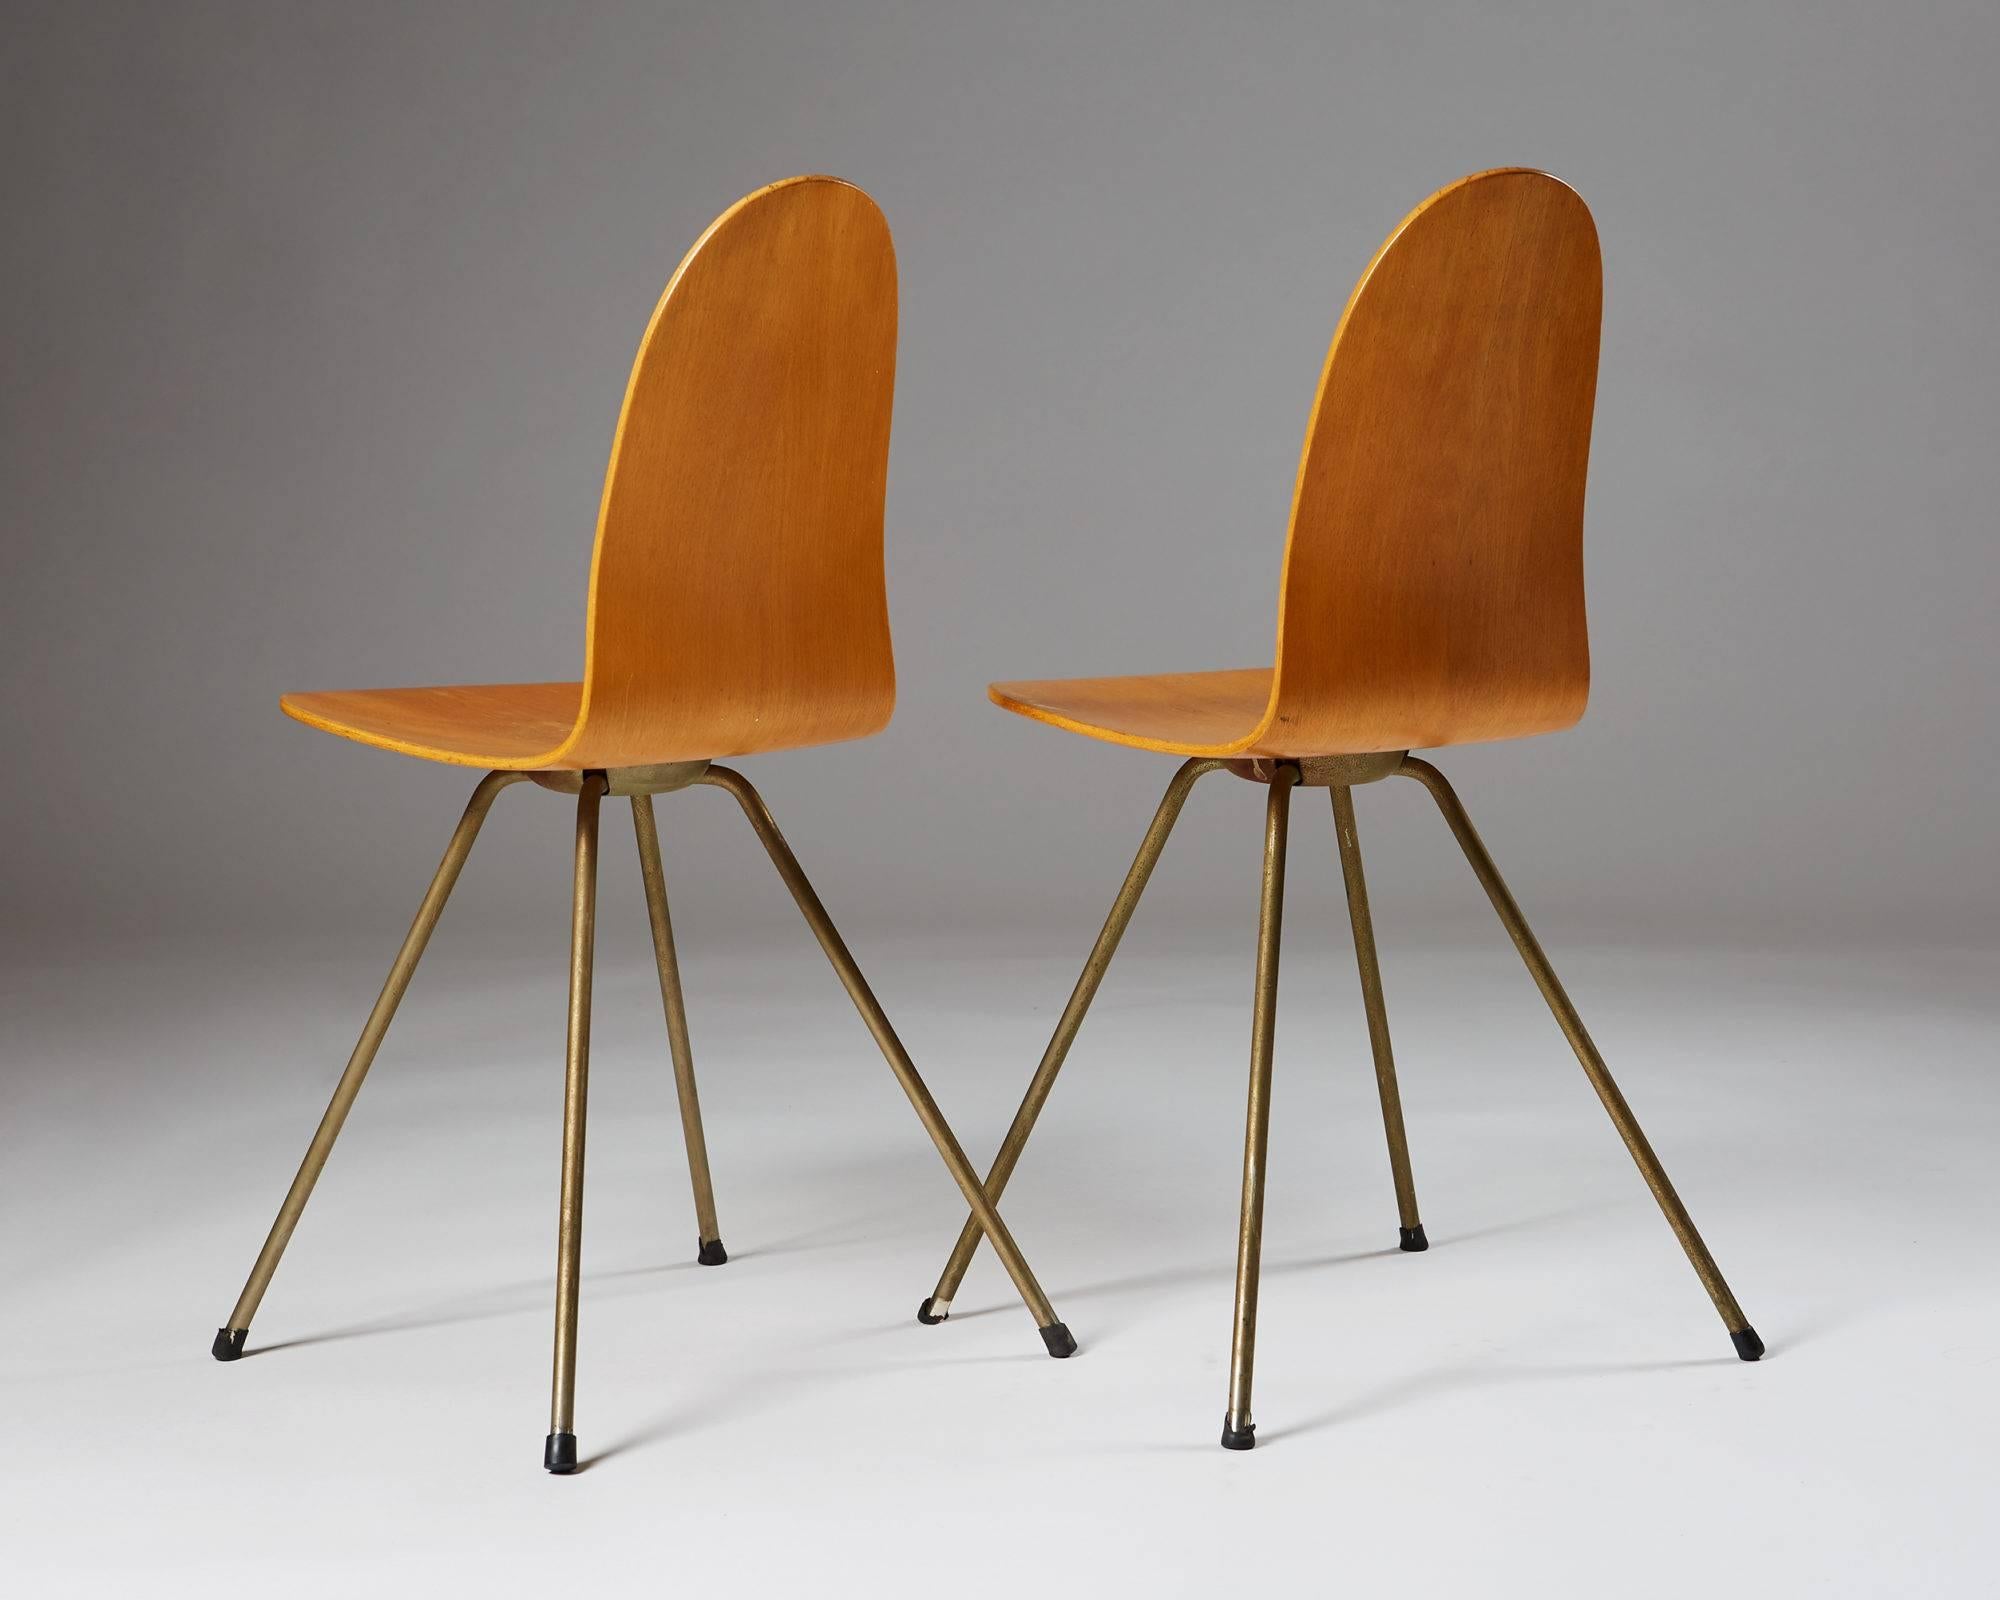 Scandinavian Modern Pair of Chairs the Tongue Designed by Arne Jacobsen for Fritz Hansen, 1955